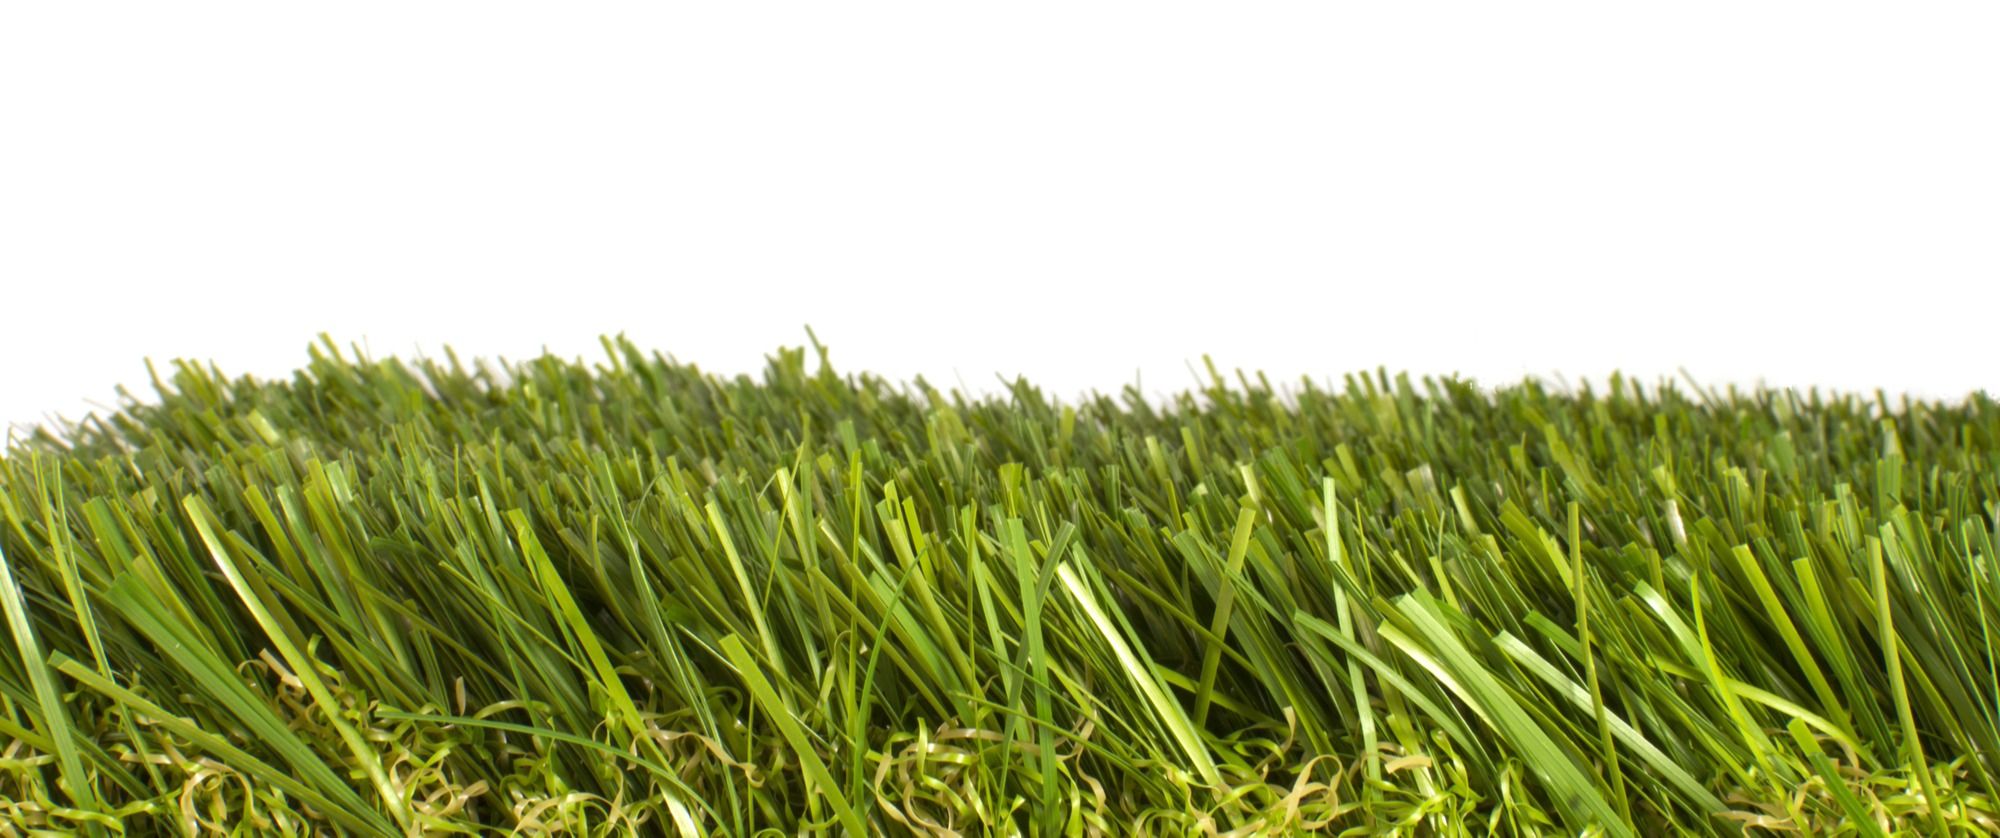 Does Artificial Grass Get Mold